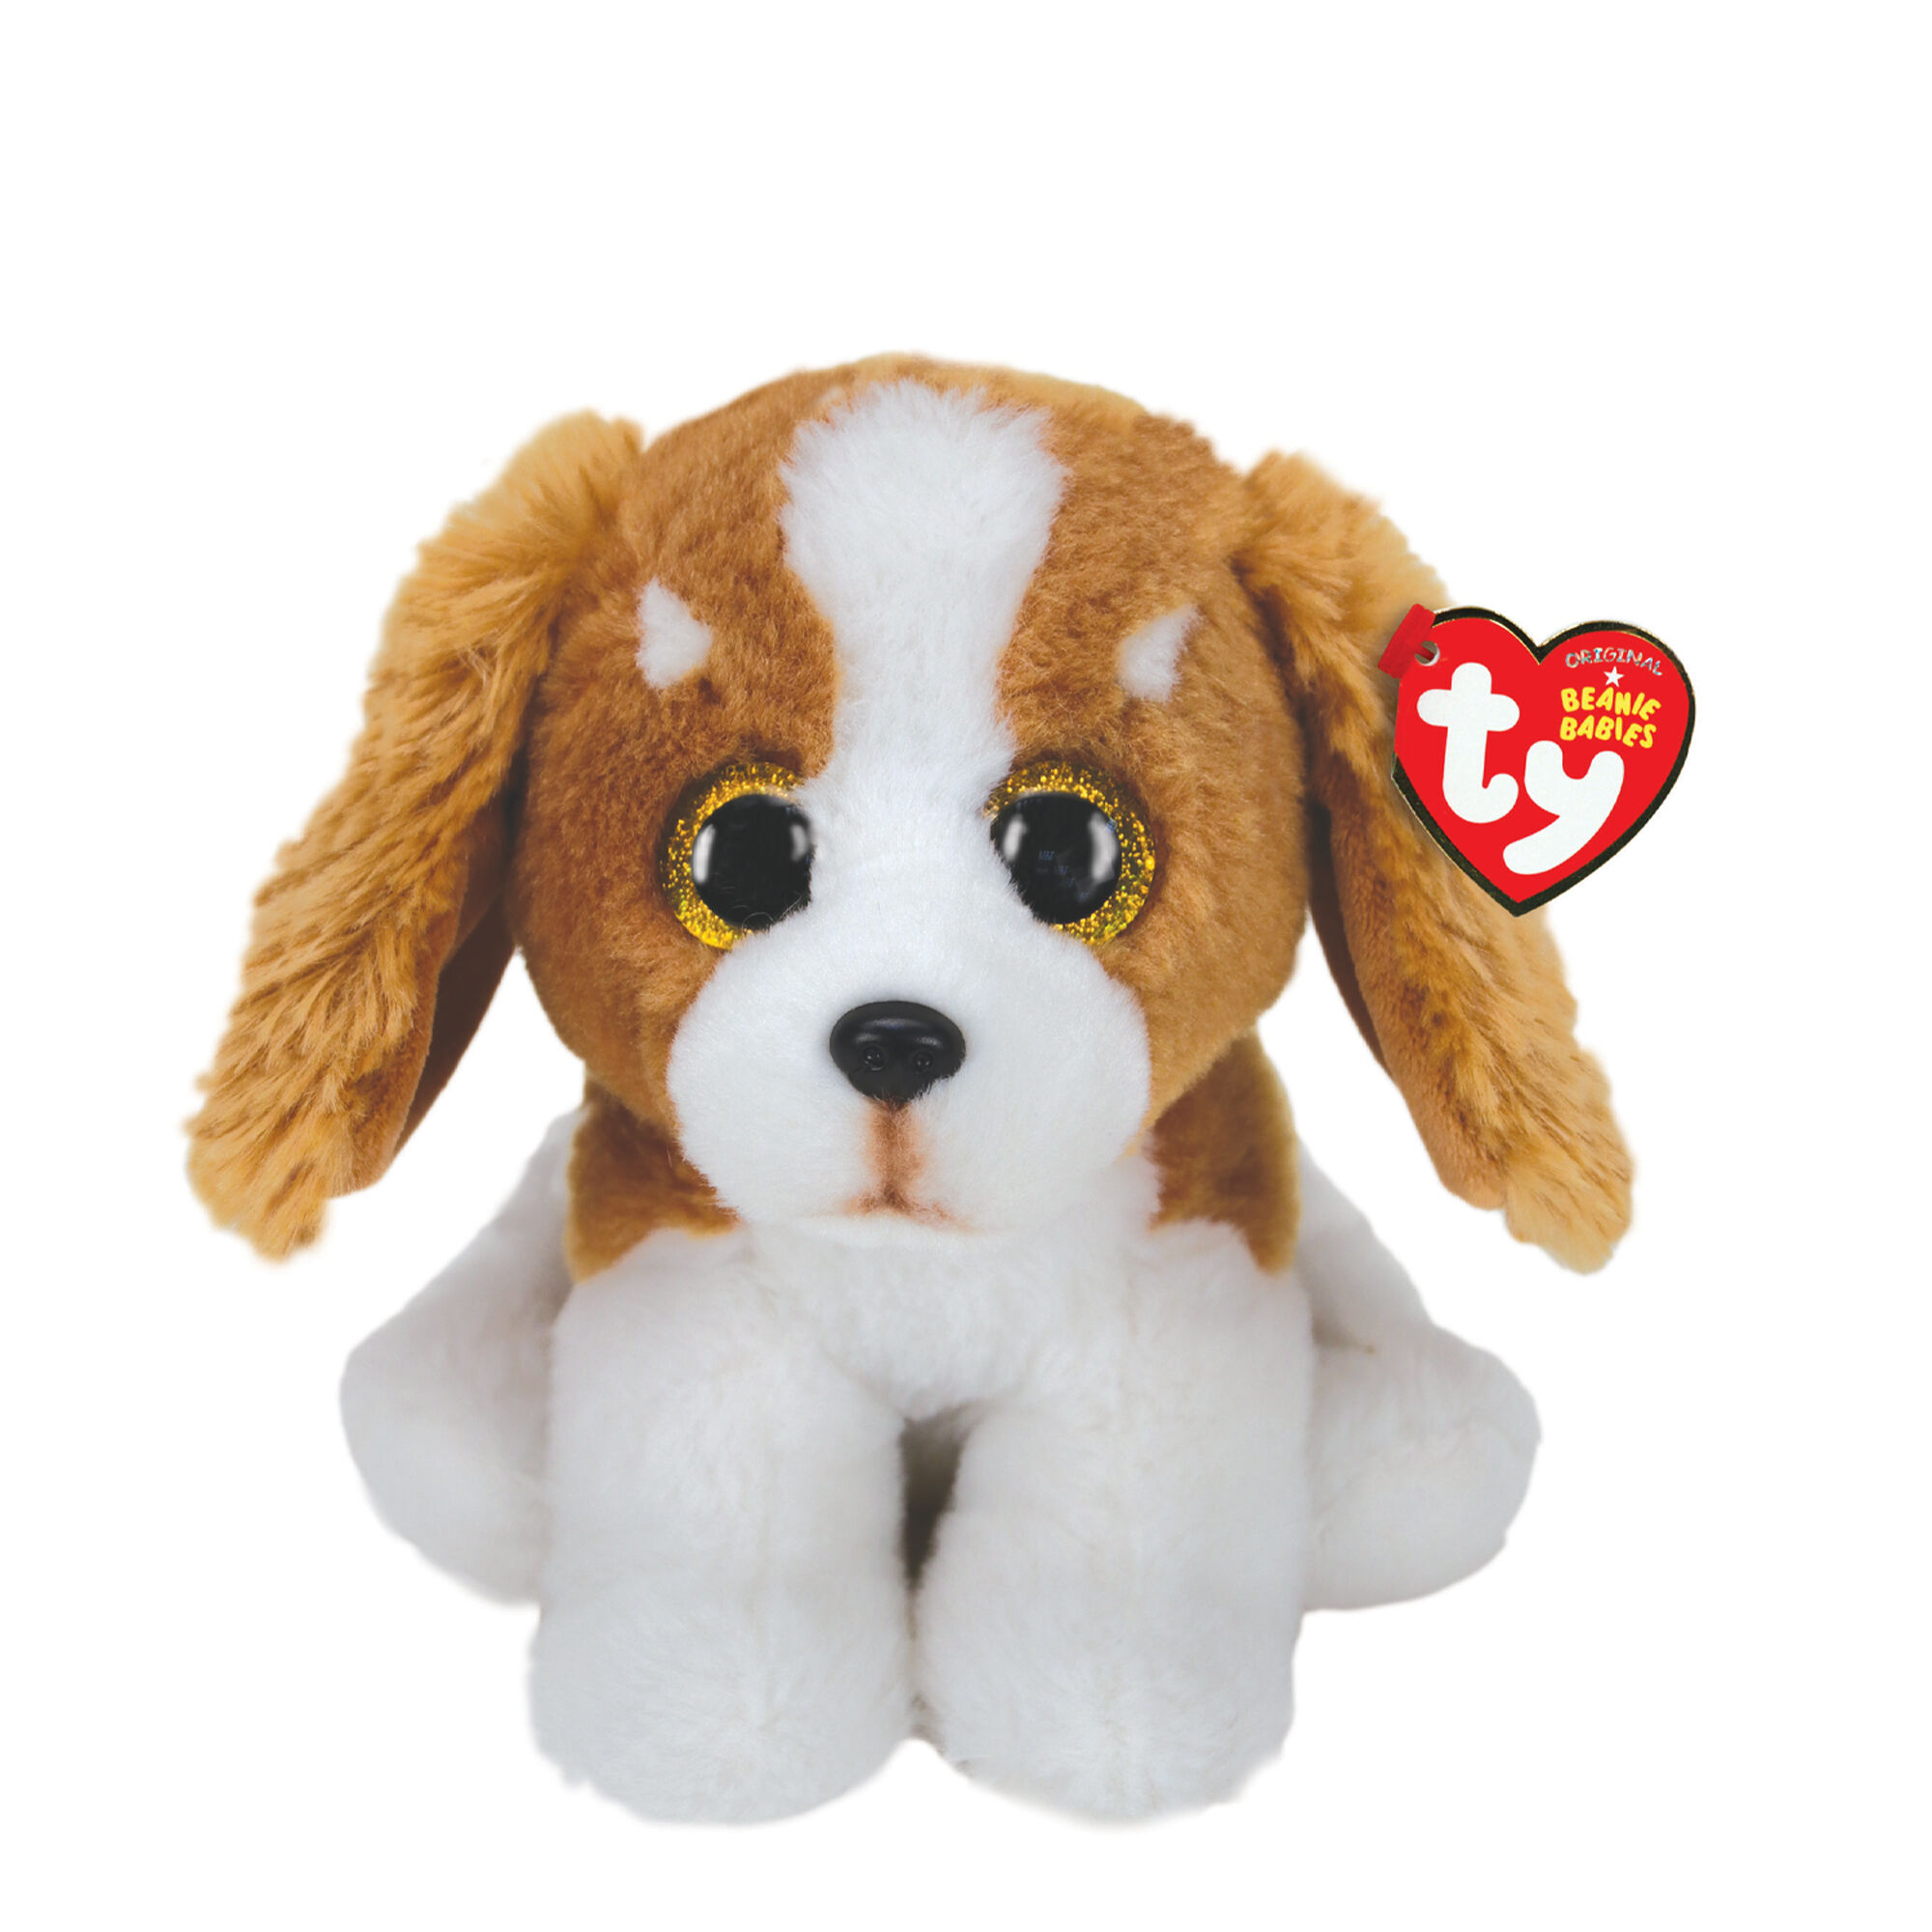 Ty Beanie Babies 6" Snicky the Dog Stuffed Animal Plush New w/ Heart Tags 